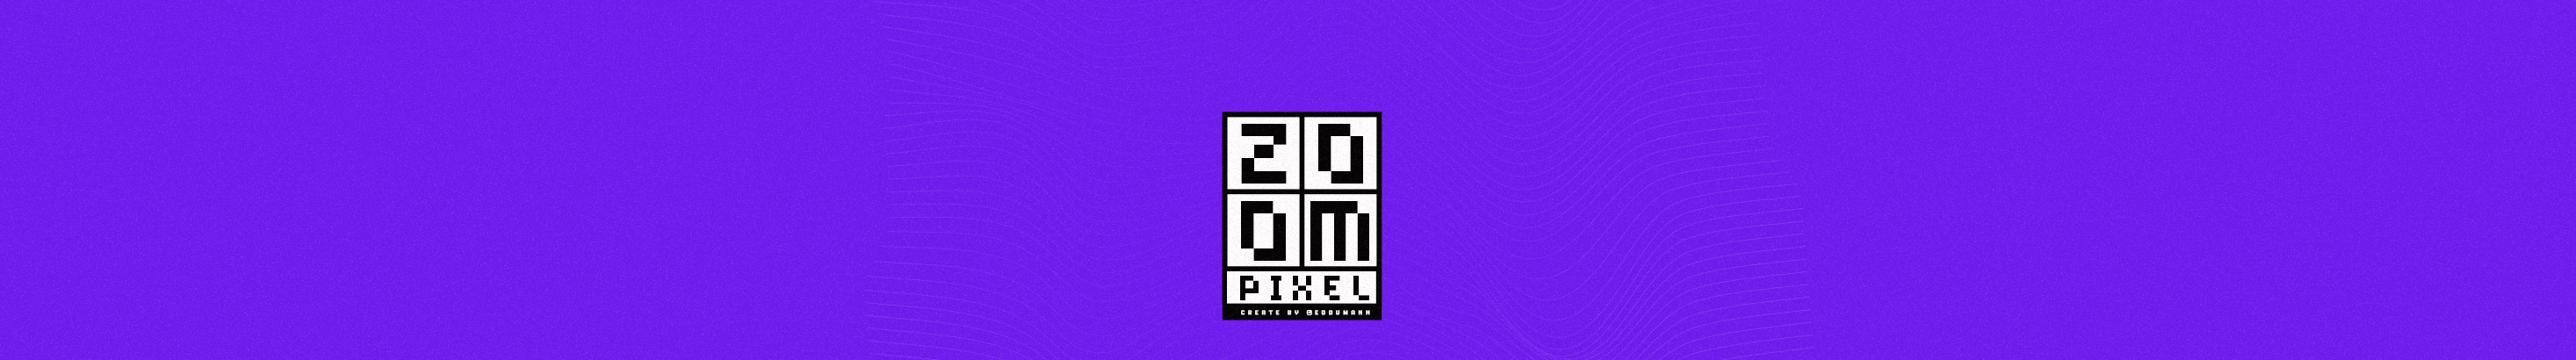 Zoom Pixel 님의 프로필 배너